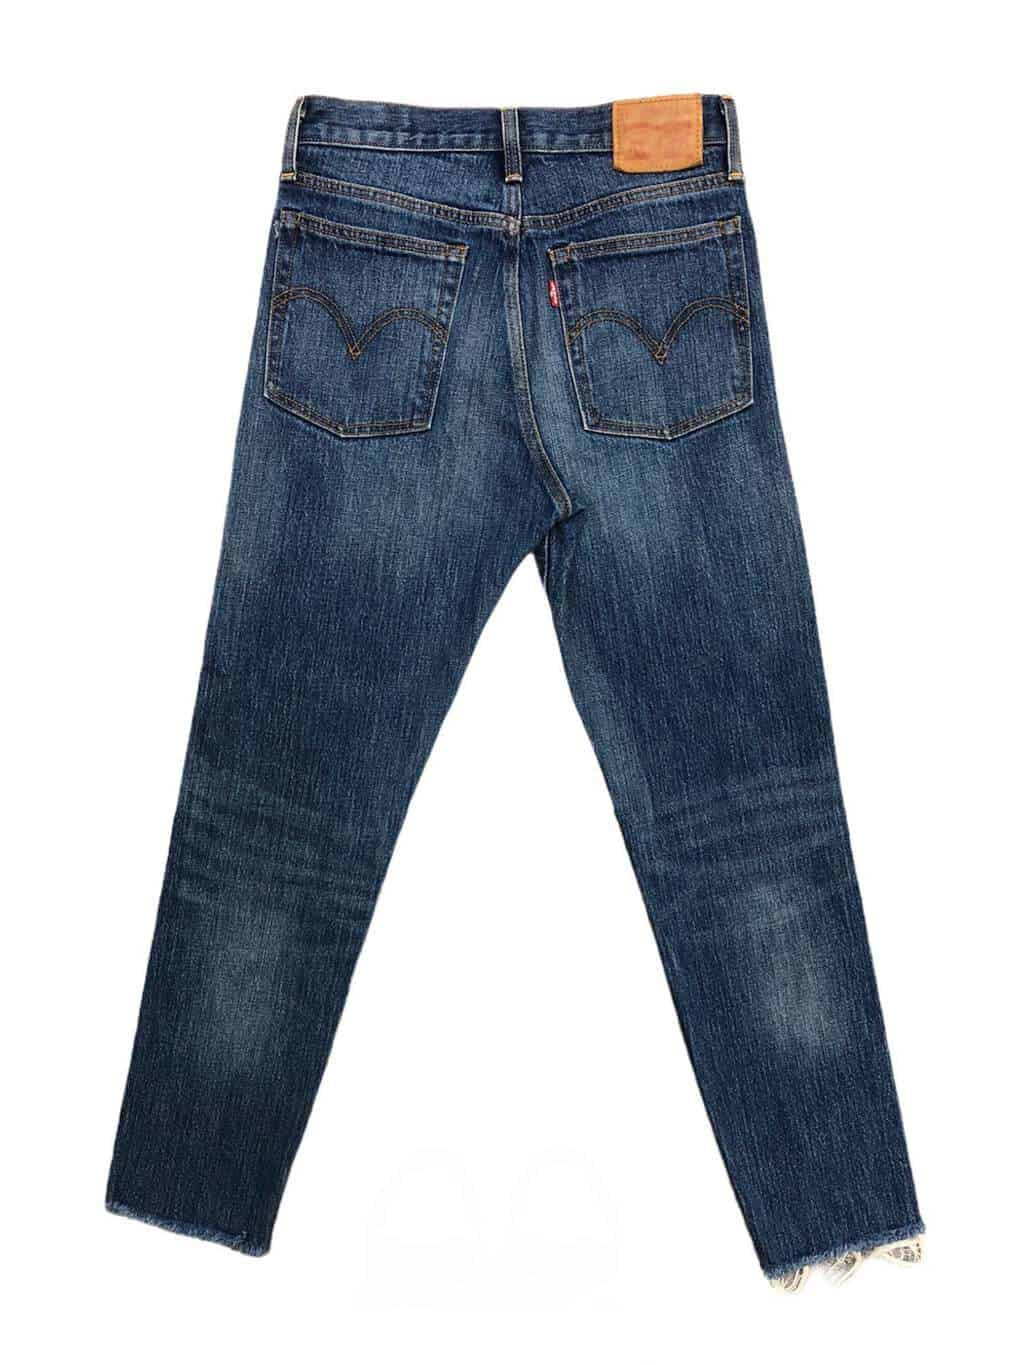 mercy staff cargo White oak limited edition Levis blue jeans with frayed hem - W28 x L26.5 -  St Cyr Vintage